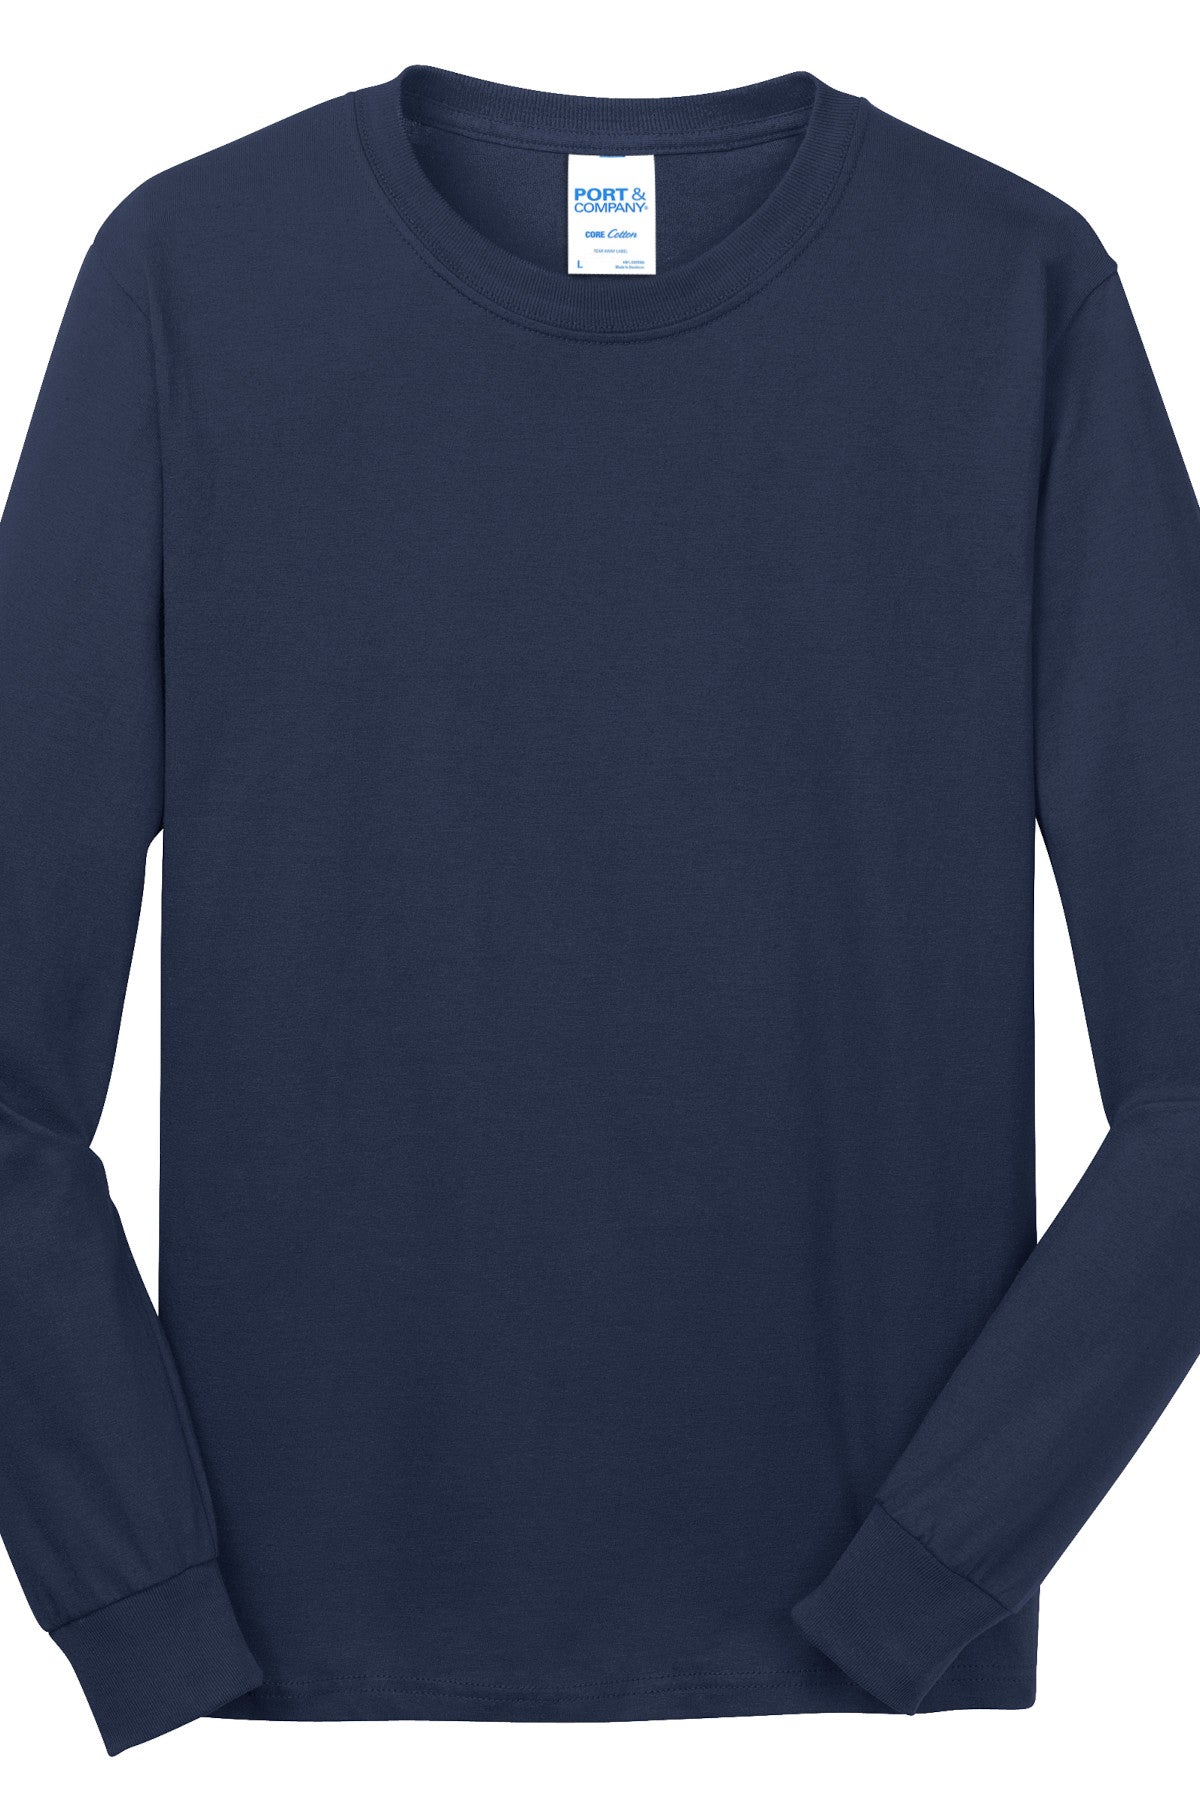 Port & Company® Pc54Ls Long Sleeve Cotton T-Shirt Ad Small / Navy